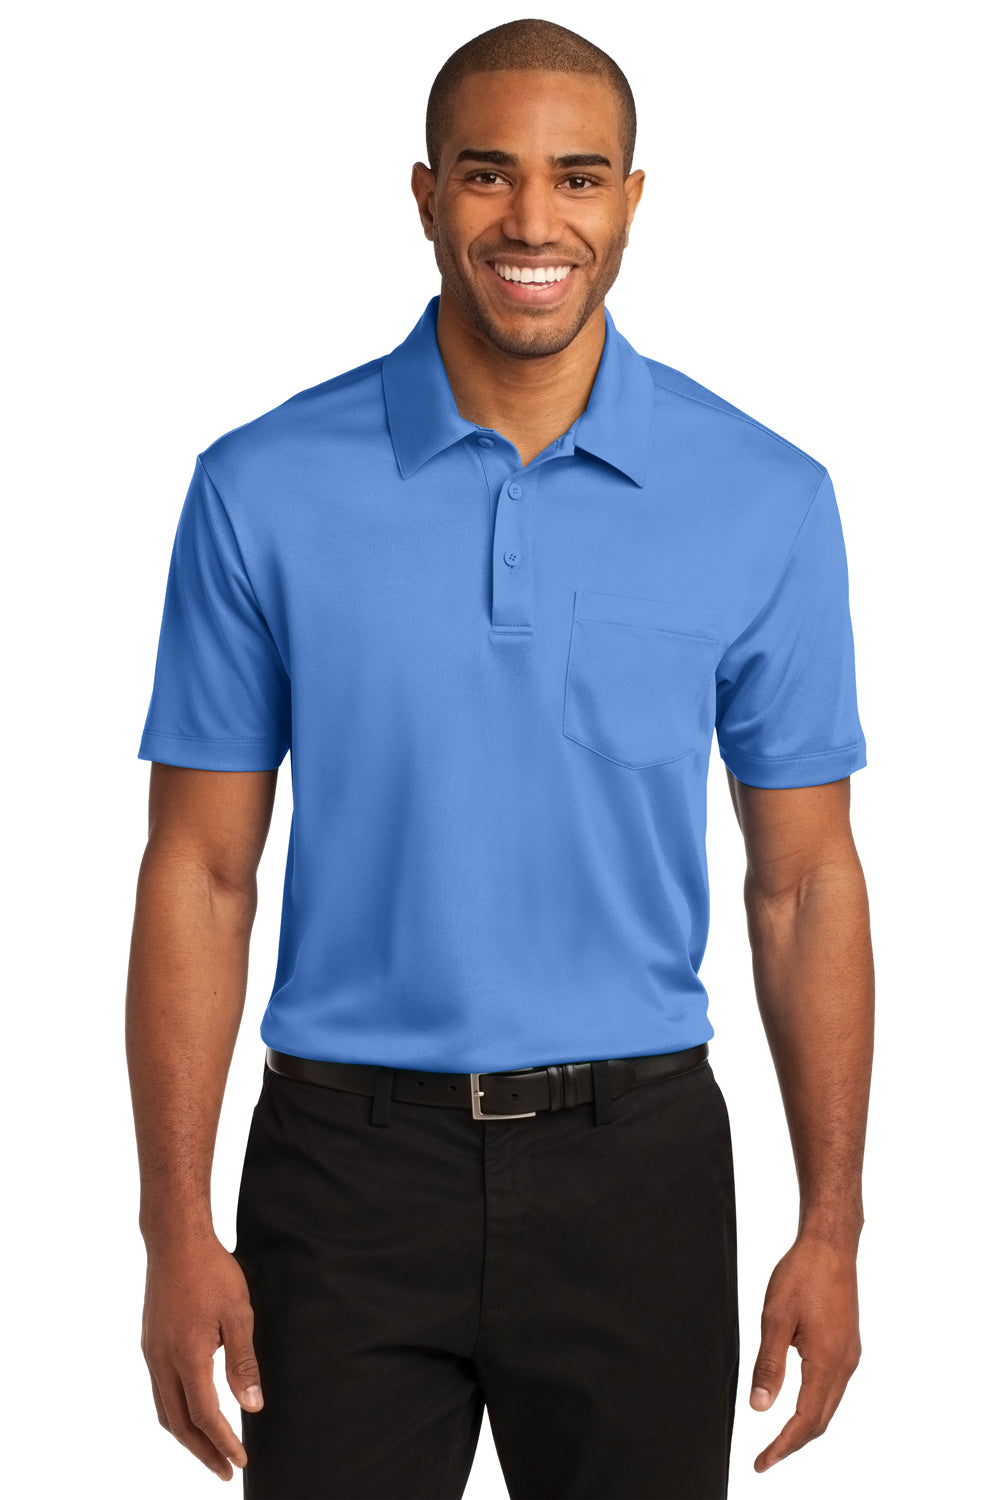 Port Authority K540P Mens Silk Touch Performance Moisture Wicking Short Sleeve Polo Shirt w/ Pocket Carolina Blue Front